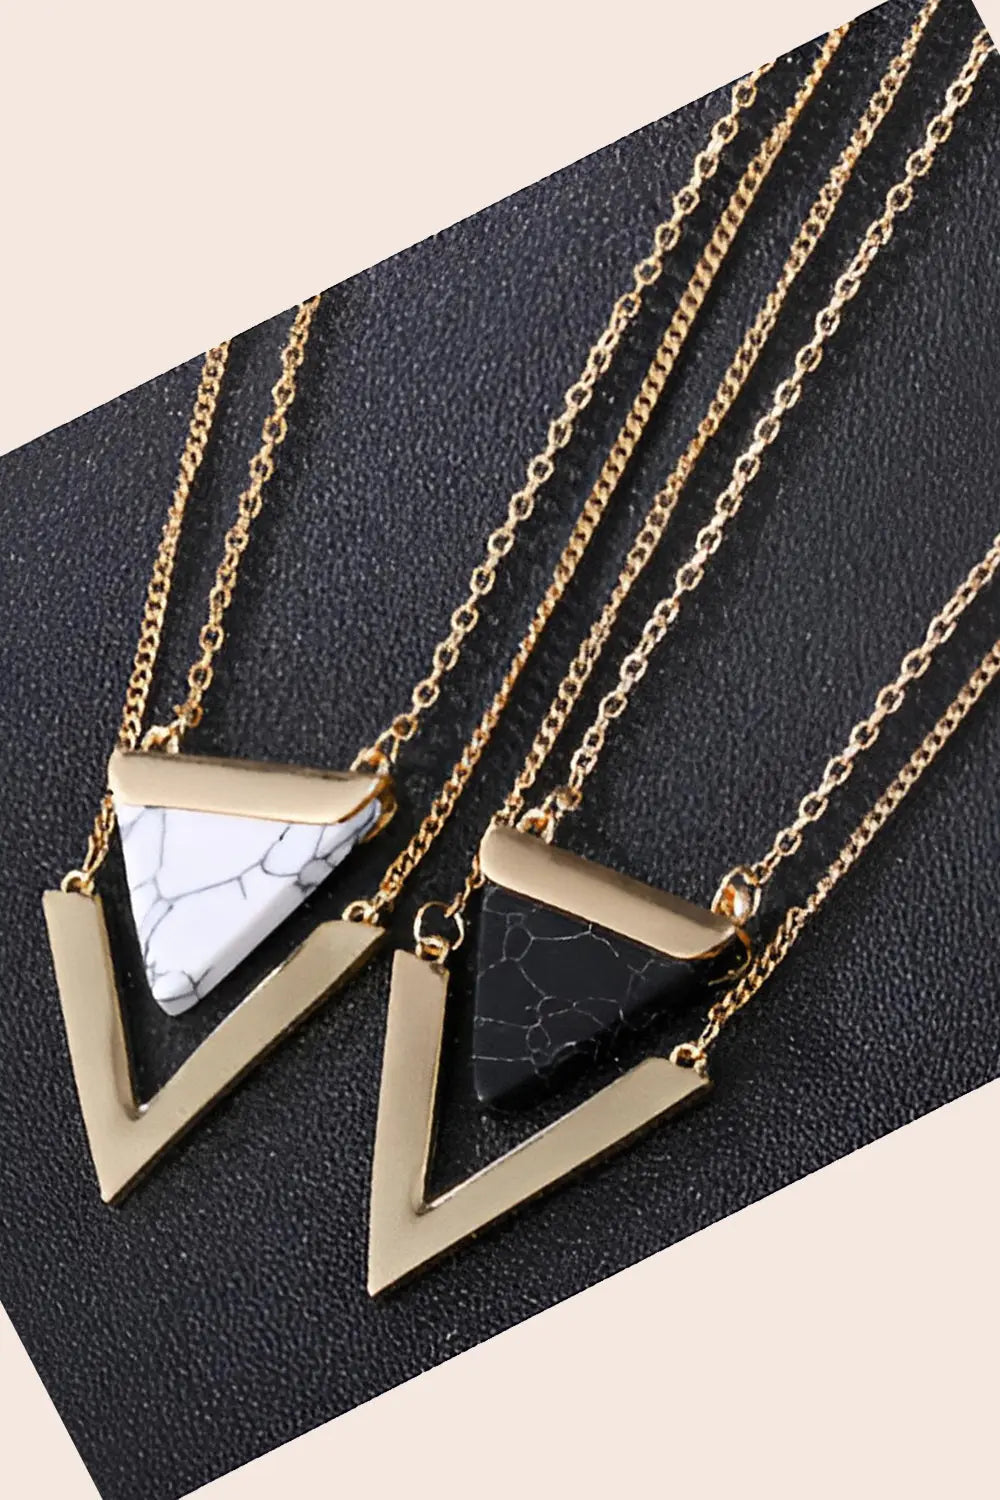 Marble Stone Triangle Necklaces - Black - White - Strange Clothes